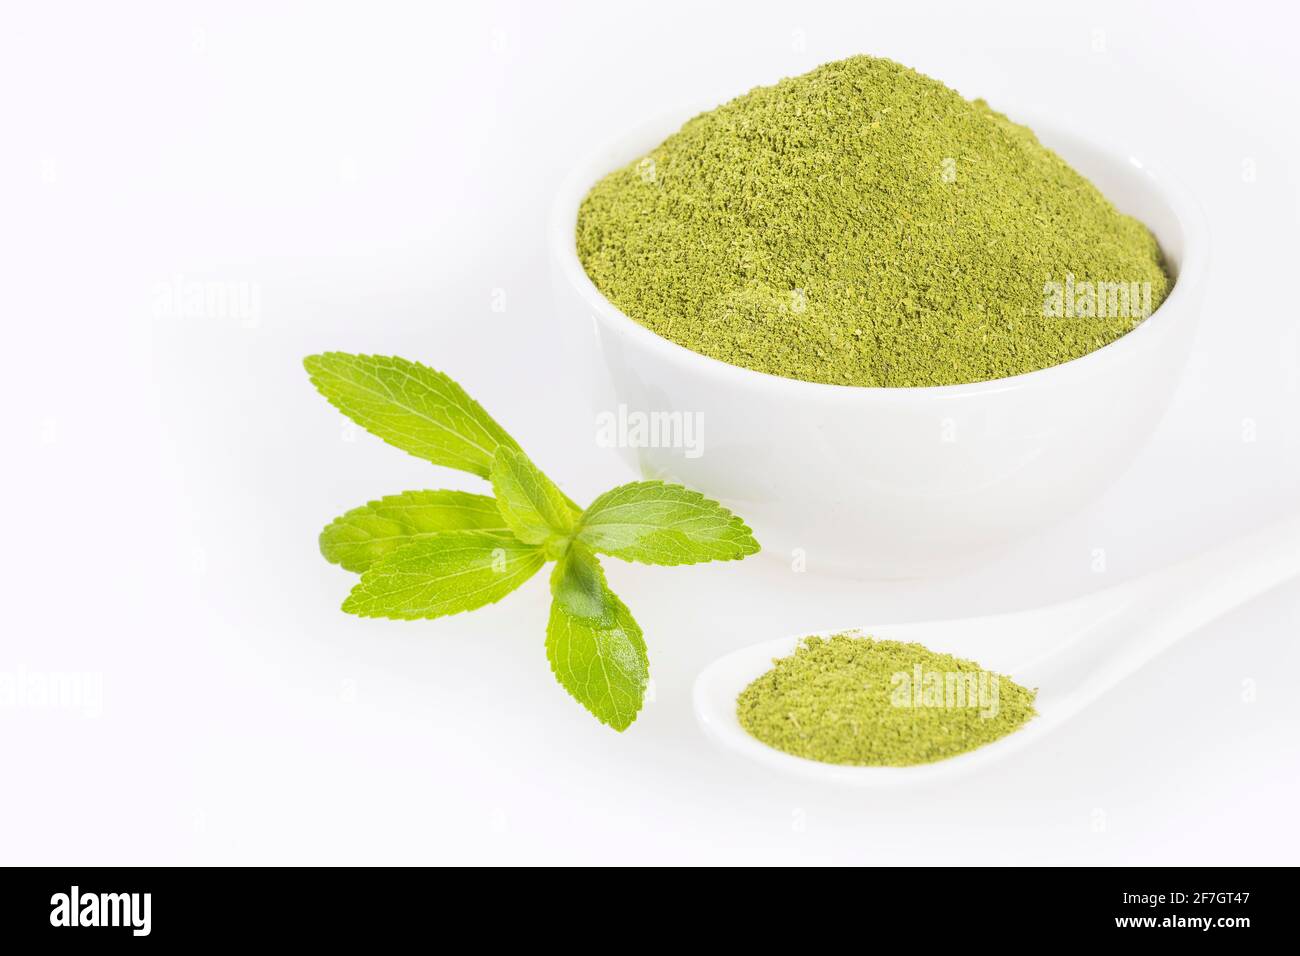 Poudre stevia - Pure Via - 250 g